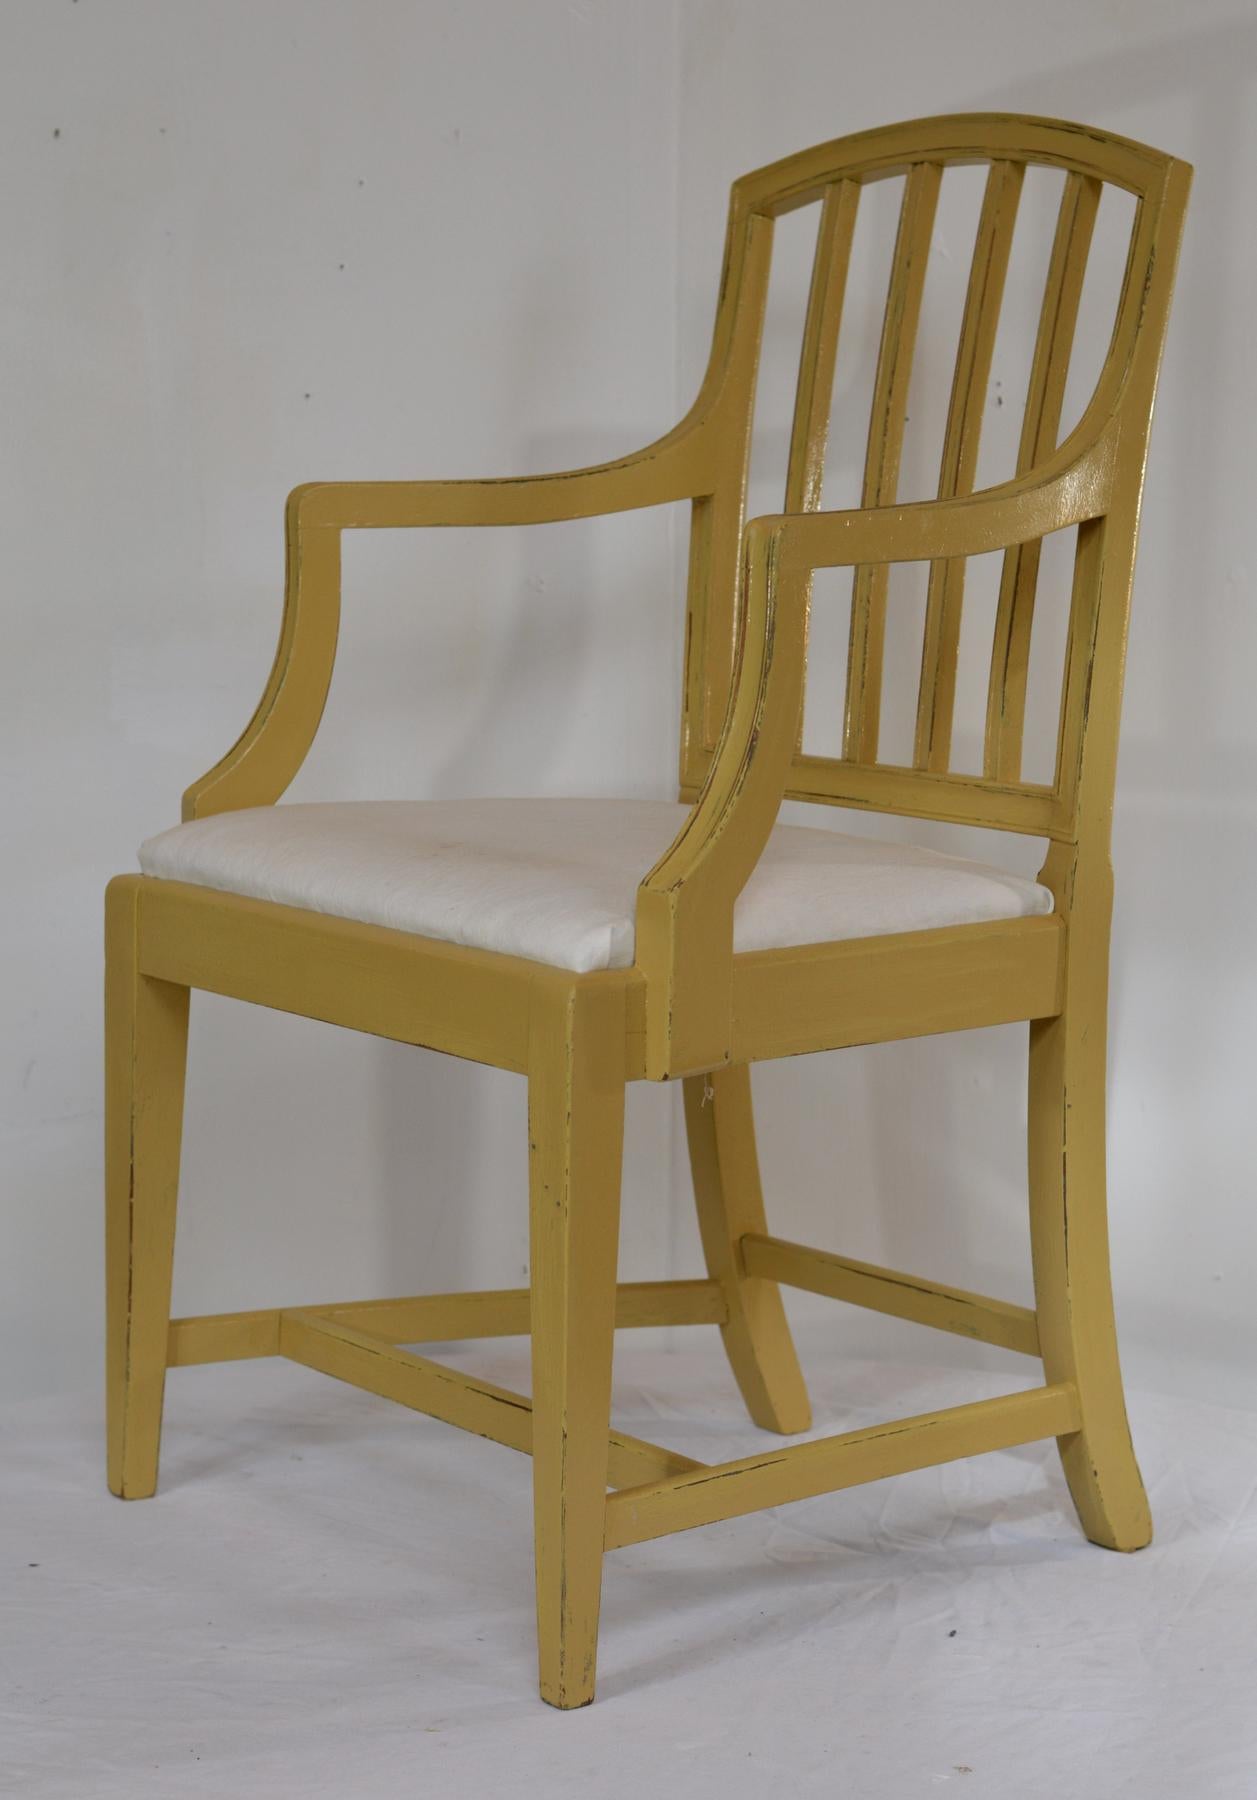 19th Century English Country House Hepplewhite Chairs in Churlish Green, Set of 6